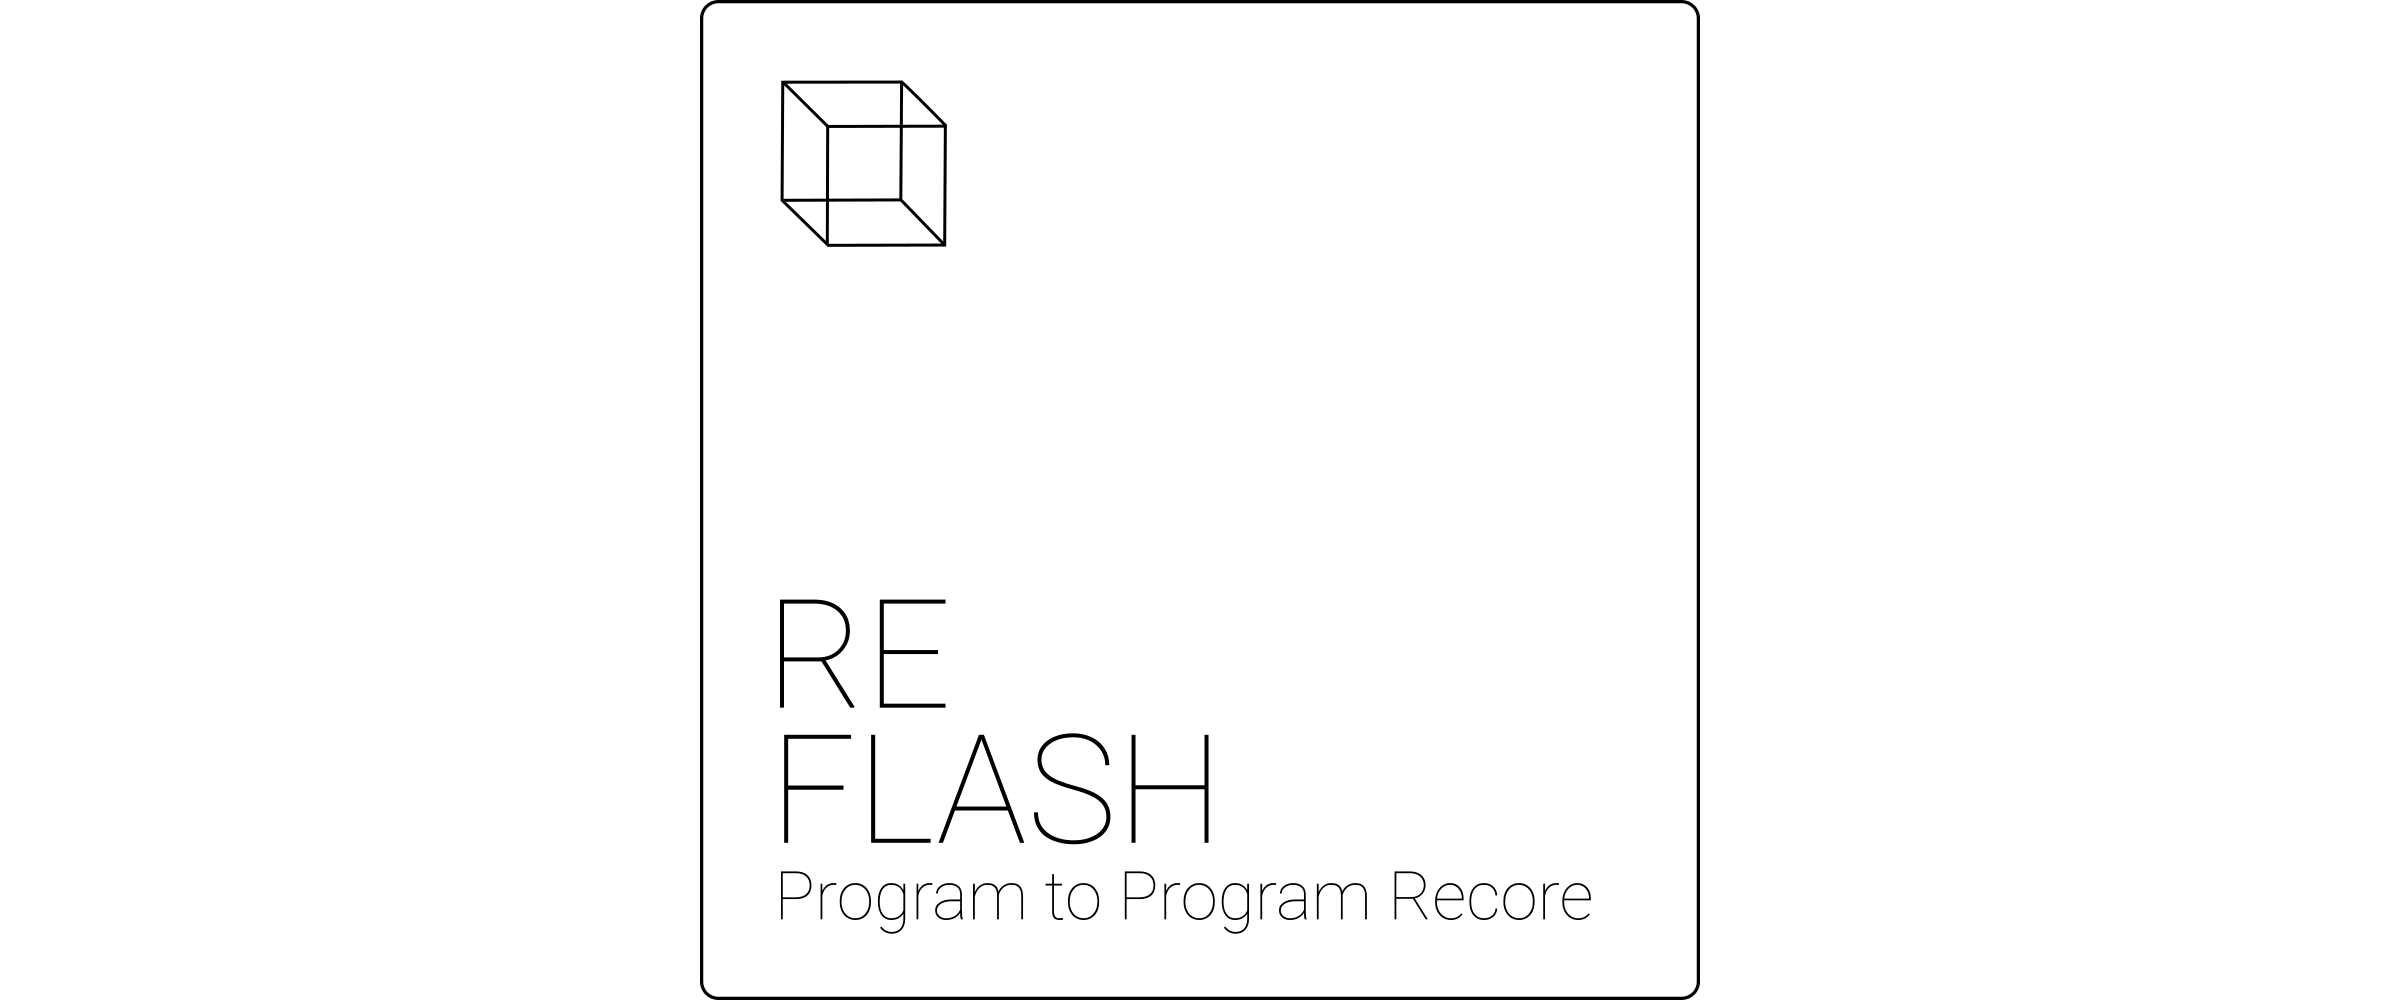 Reflash header.png